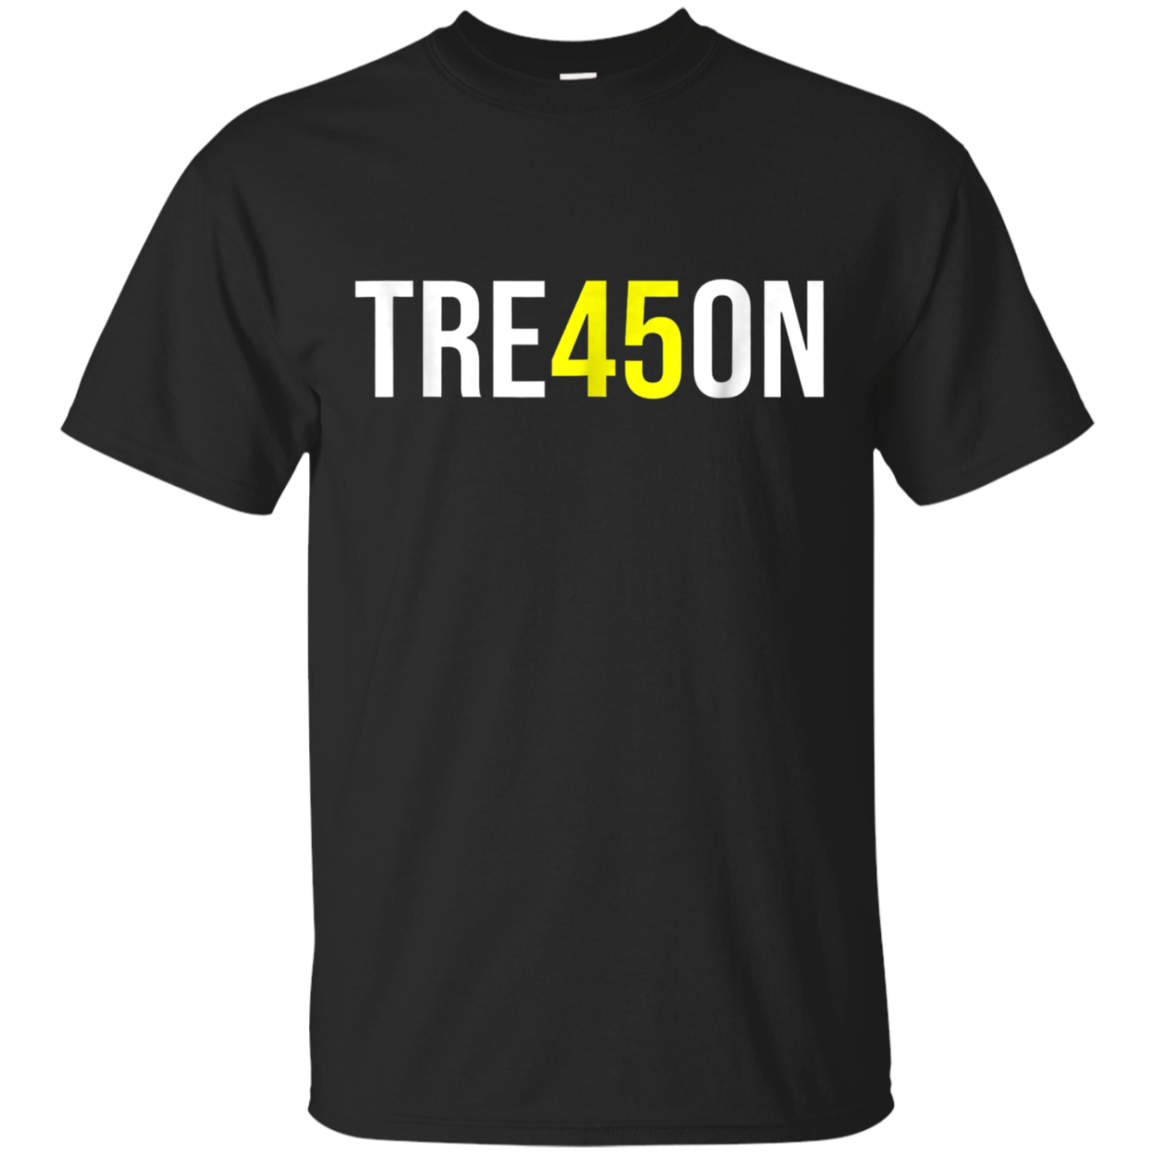 Tre45on Treason President Trump Resistance Gift T-shirt